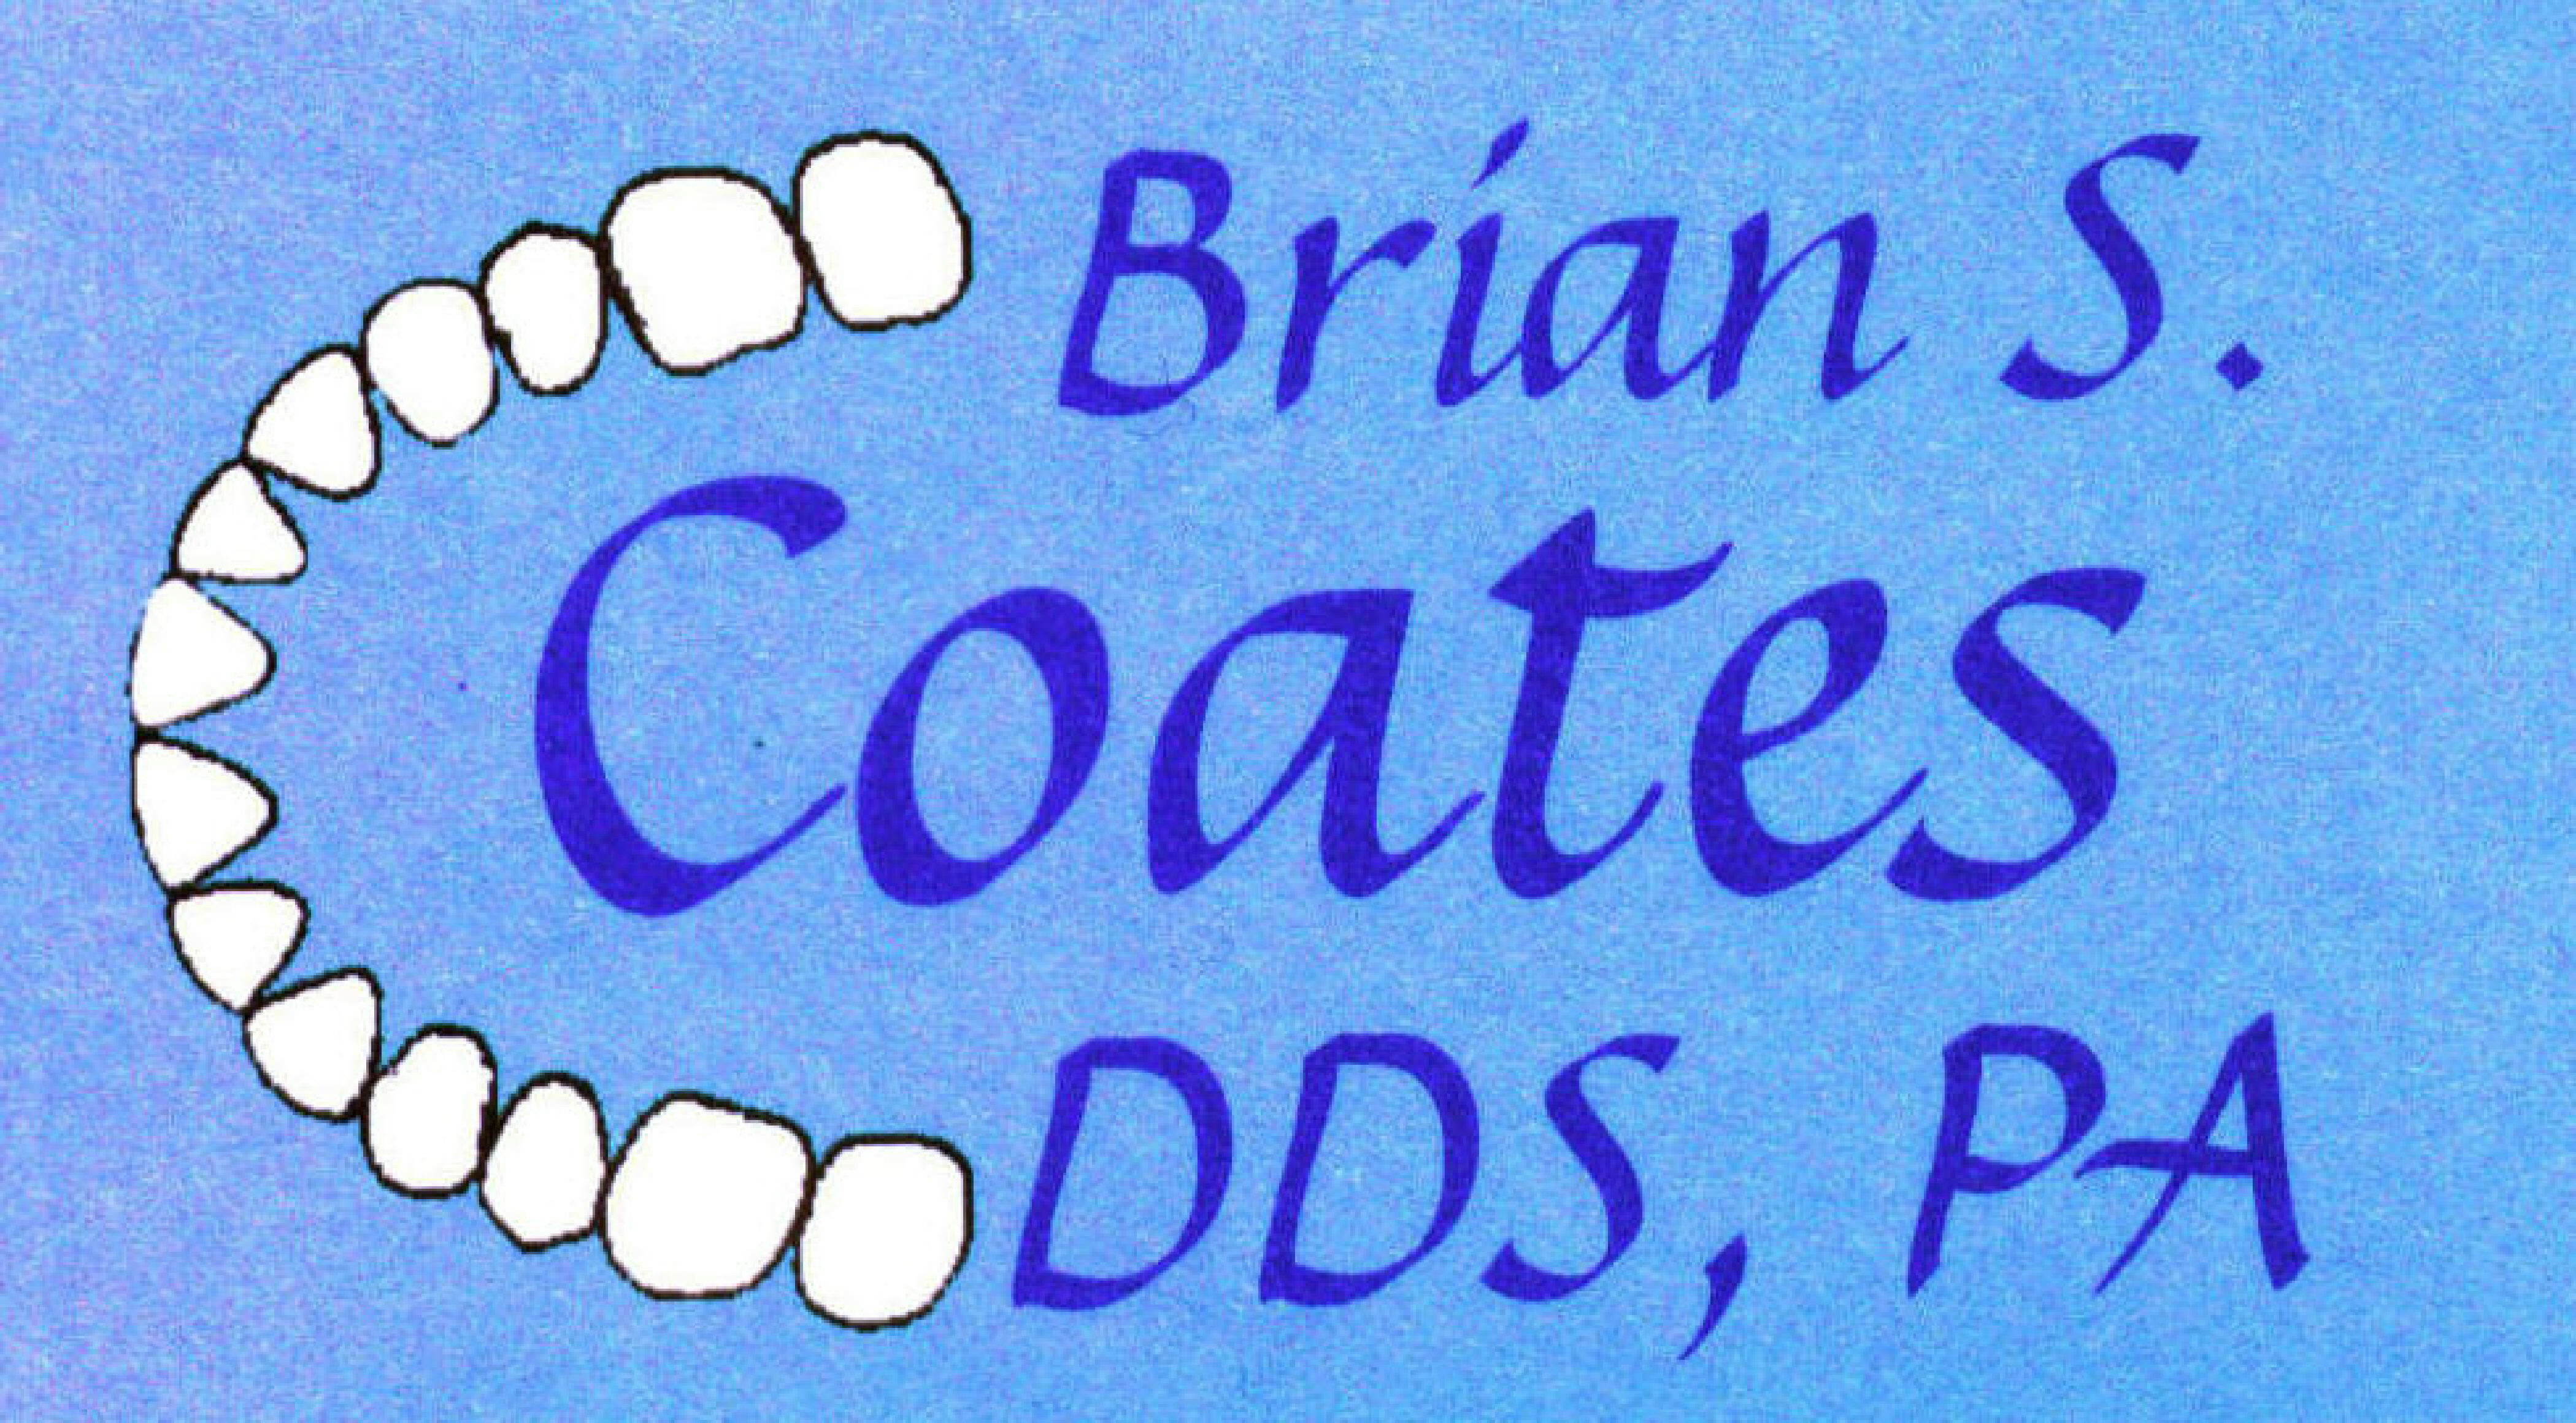 Dr. Brian S. Coates